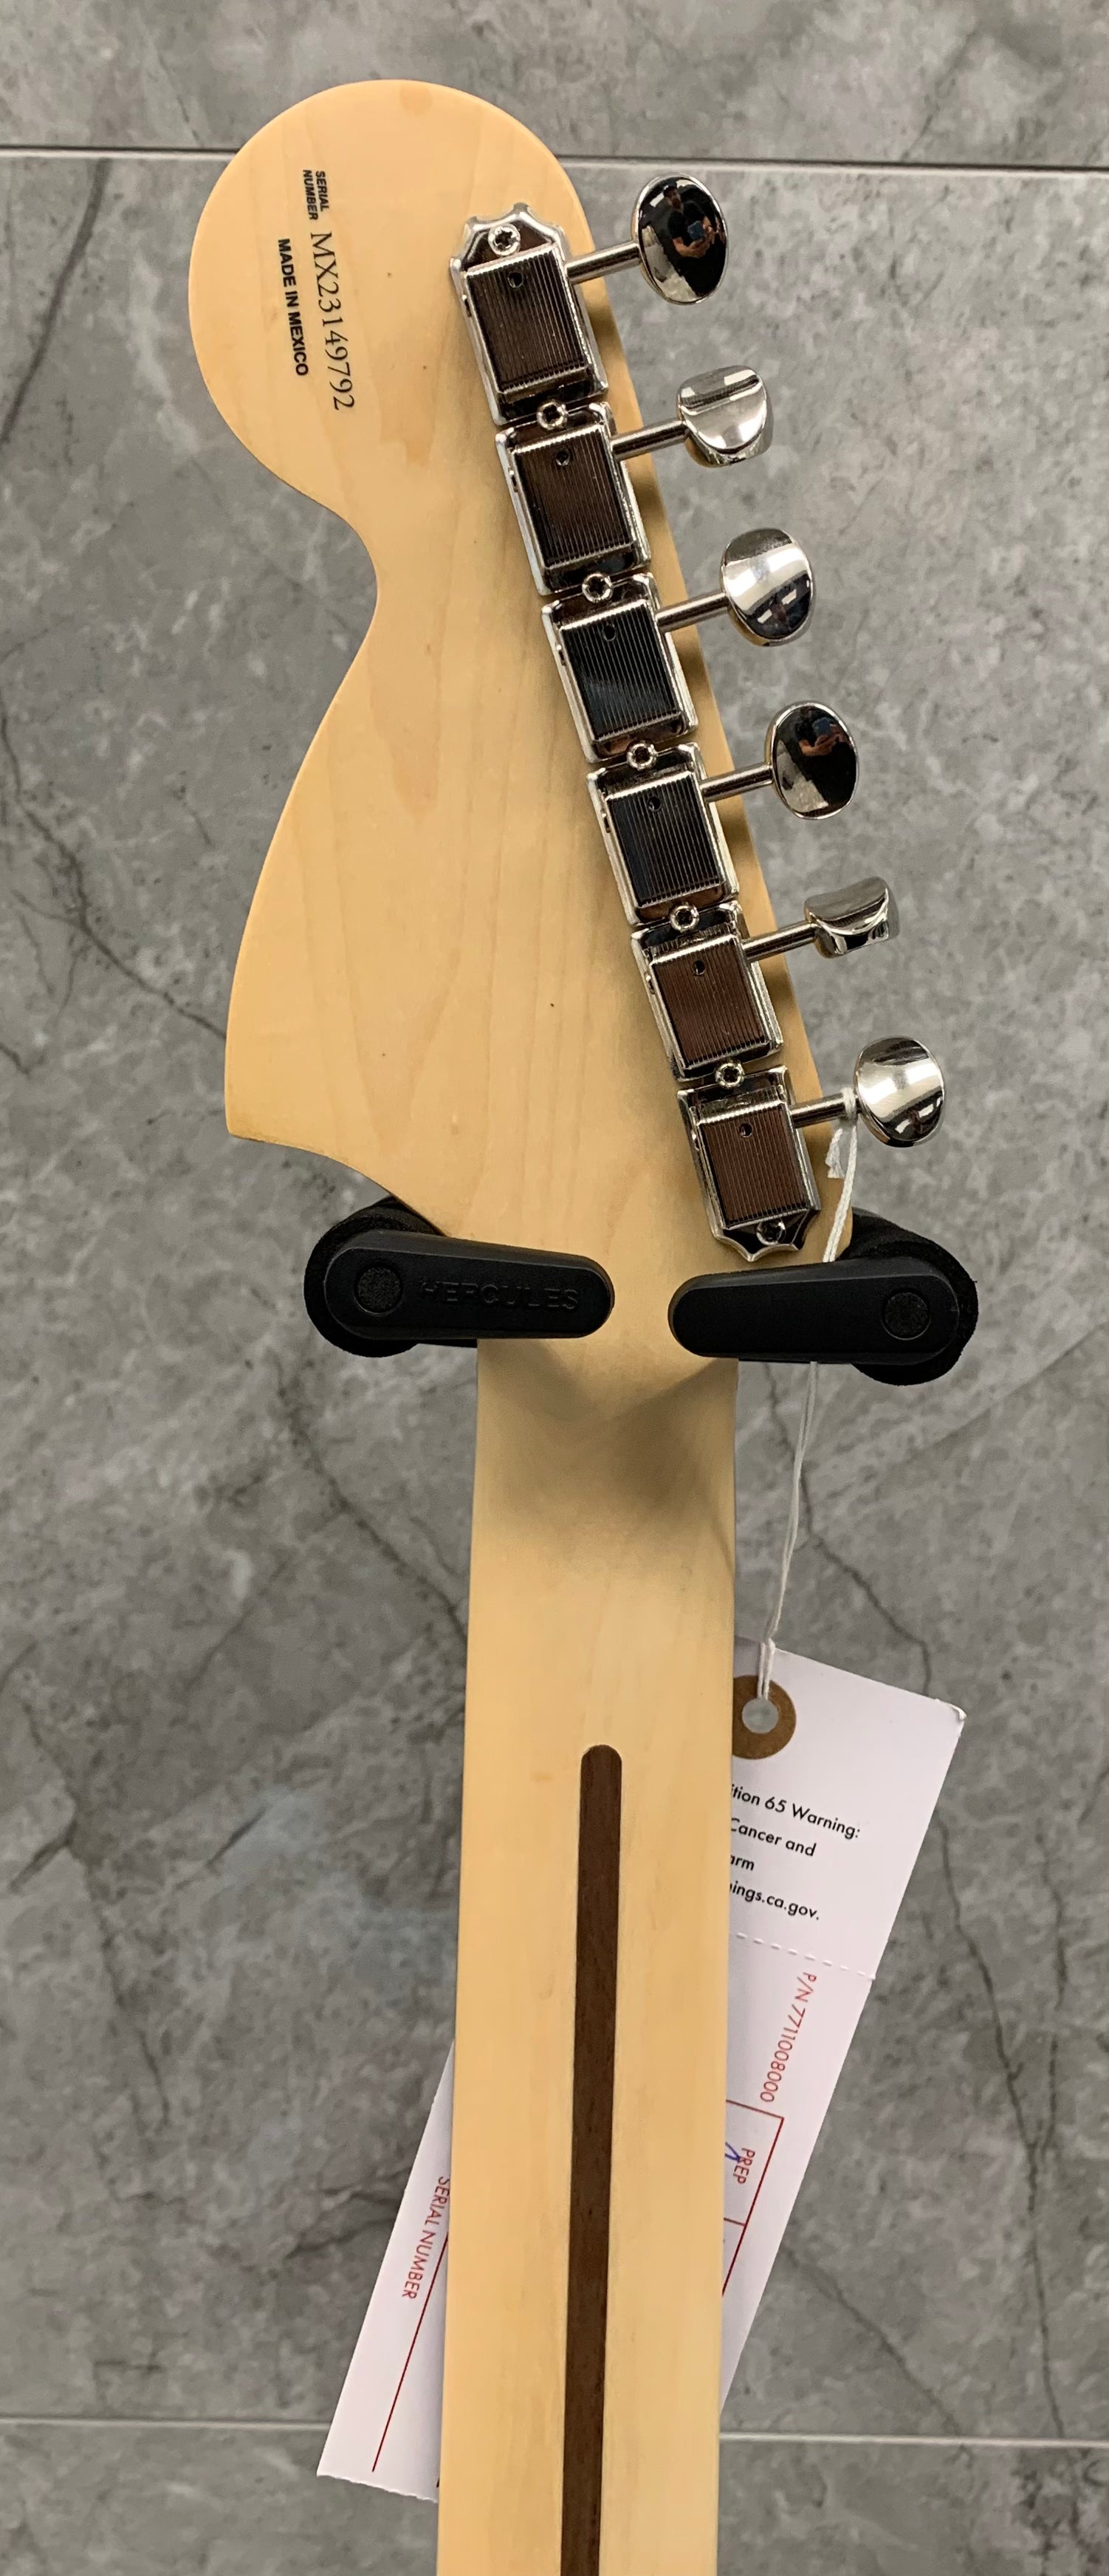 FENDER Limited Edition Tom Delonge Stratocaster, Rosewood Fingerboard, Daphne Blue 0148020304 SERIAL NUMBER MX23149792 - 7.2 LBS